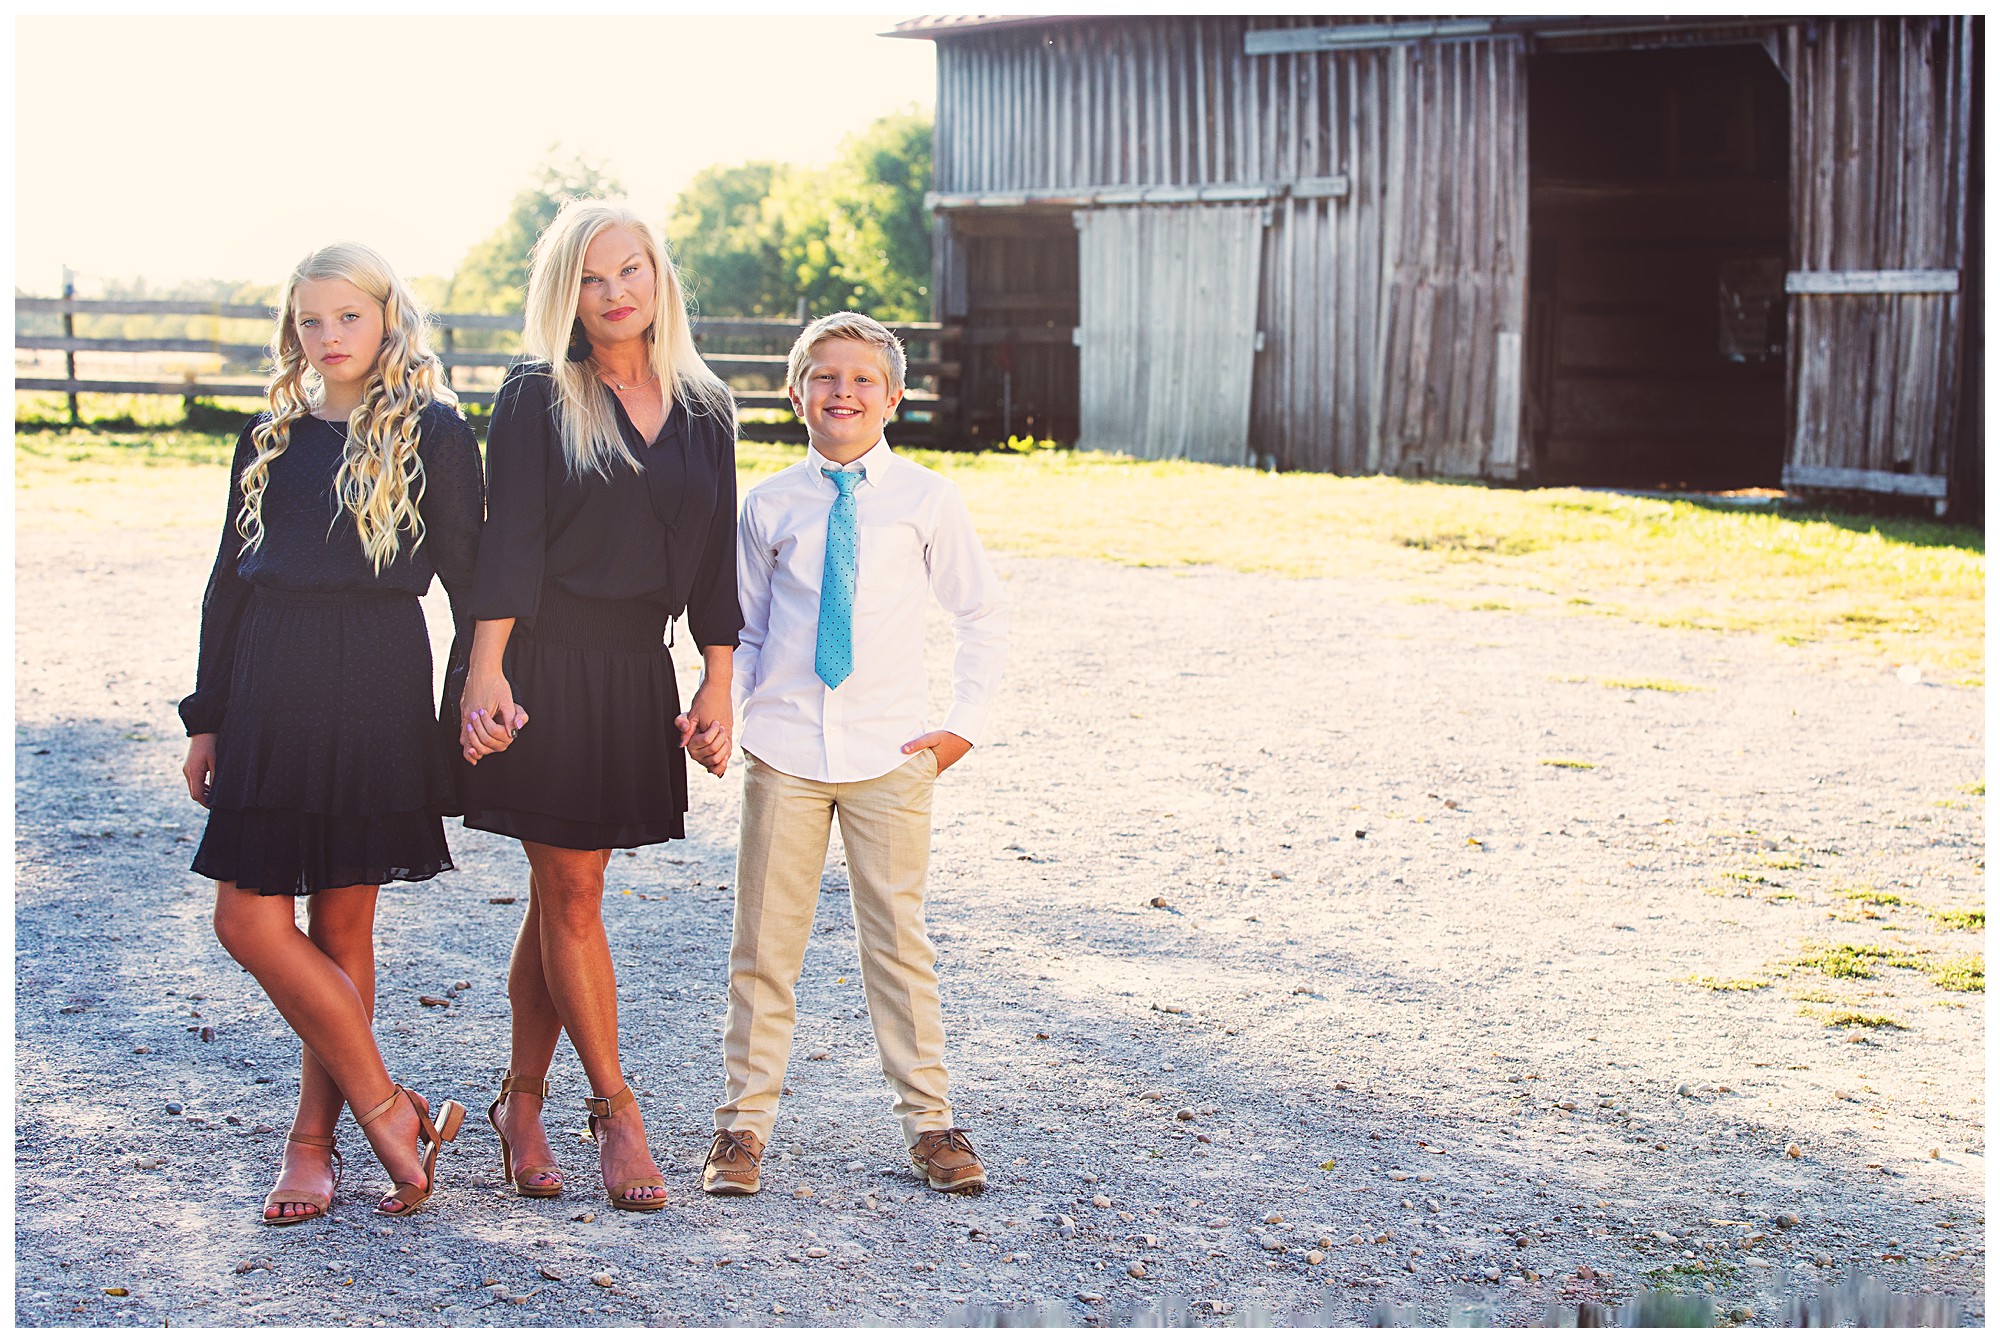 Fall Family Portrait Blackacre Farm Louisville Avery's Photography

